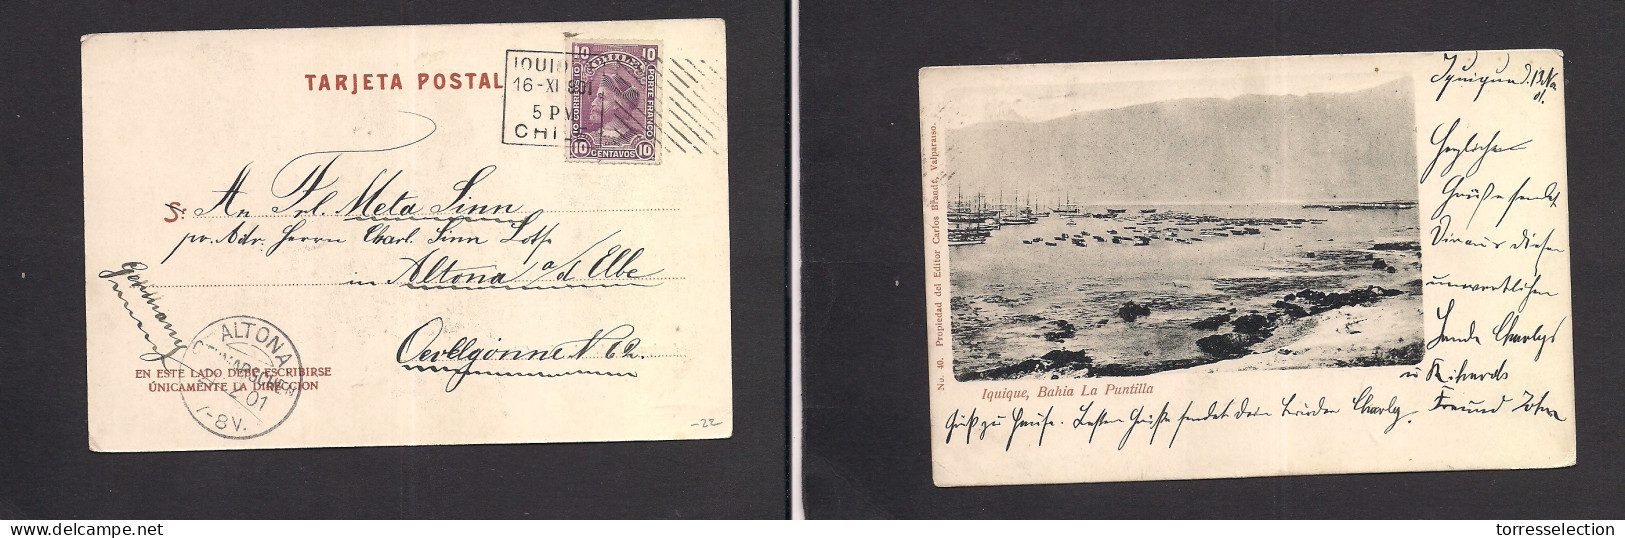 Chile - XX. 1901 (16 Nov) Iquique - Germany, Altona (21 Dec) Iquique Bahia Fkd Photo Ppc. Fine. - Chile